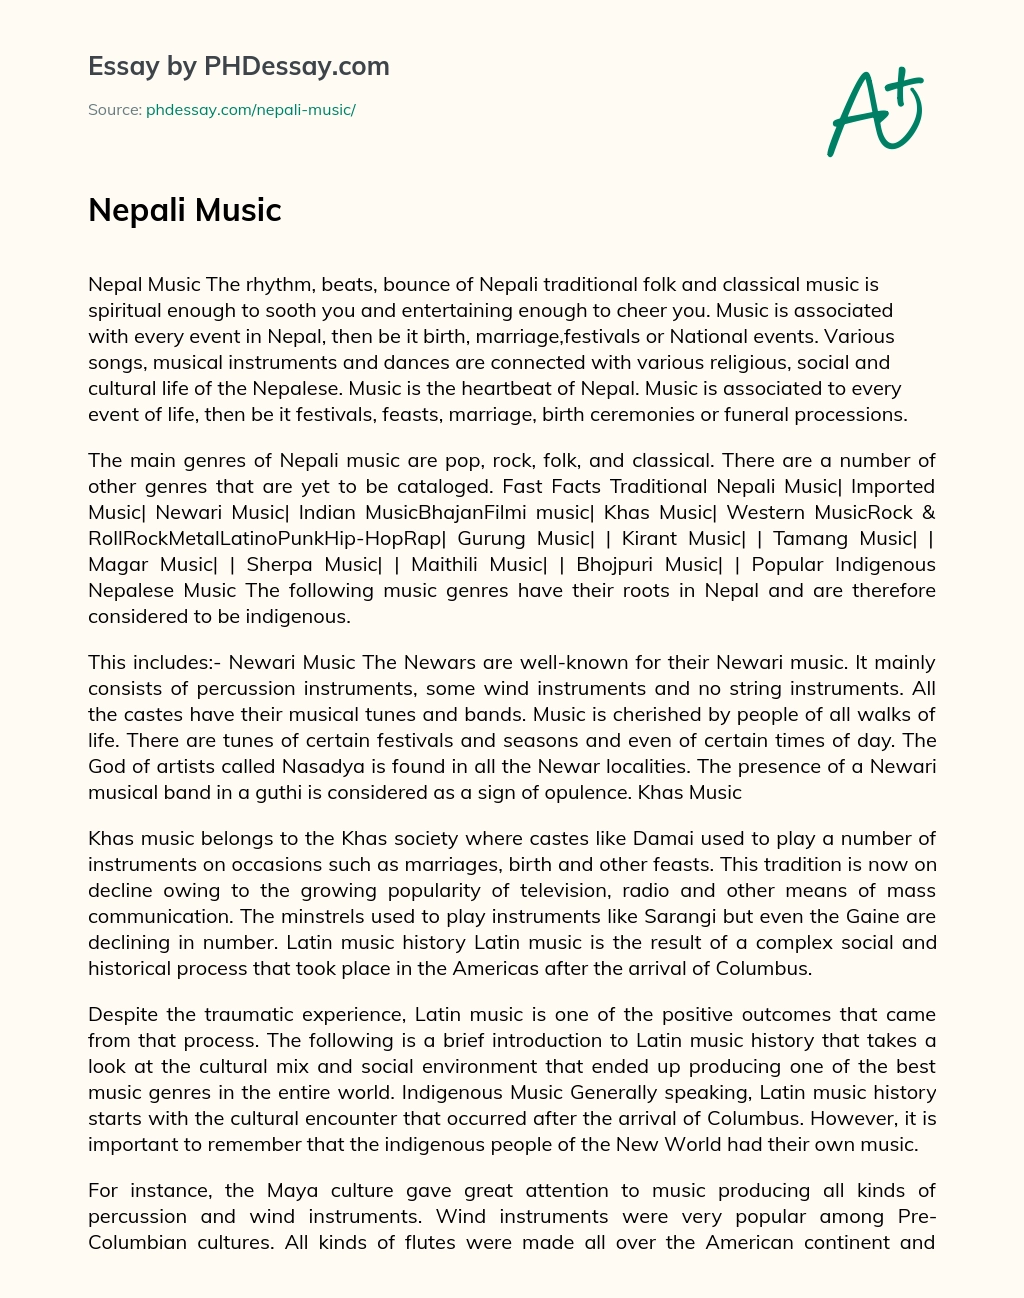 Nepali Music essay